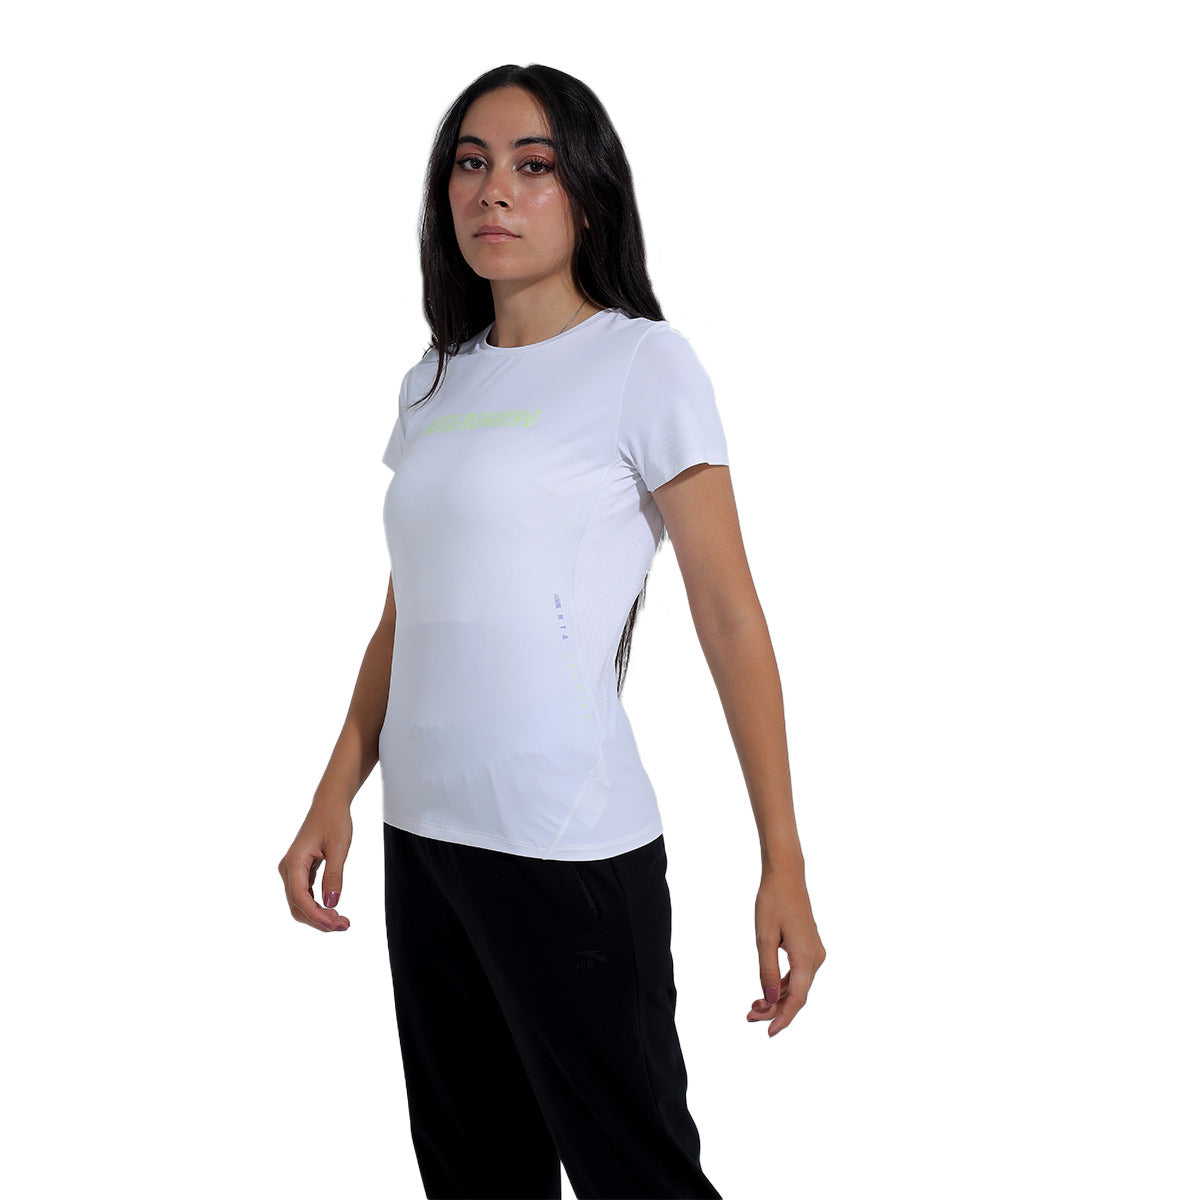 Anta Sports T-Shirt For Women, White